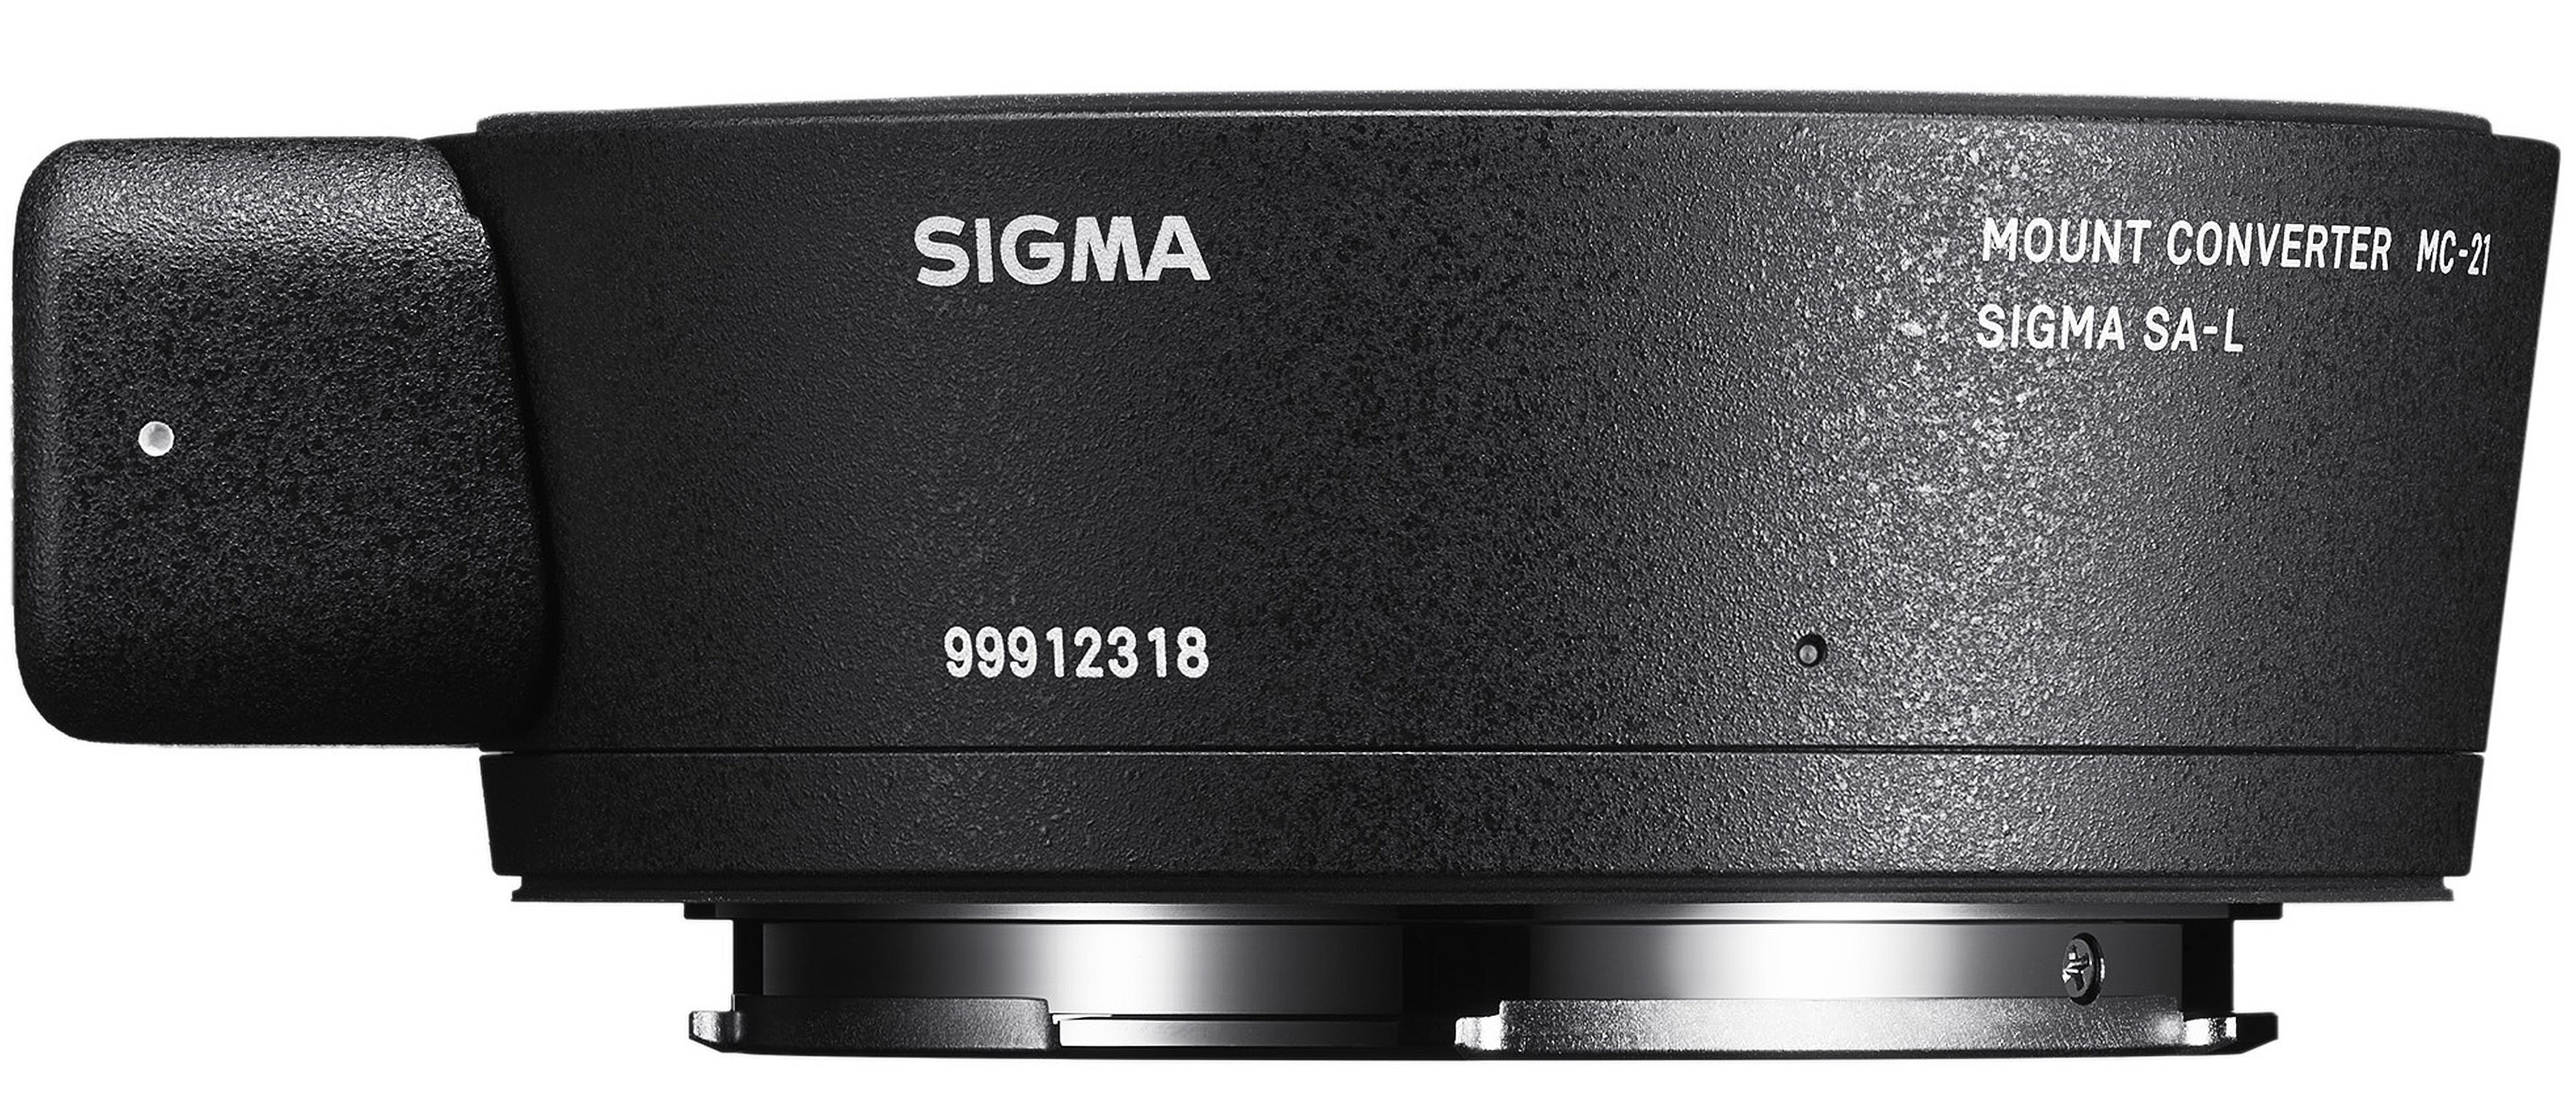 Preview Image: Sigma Mount-Converter MC-21